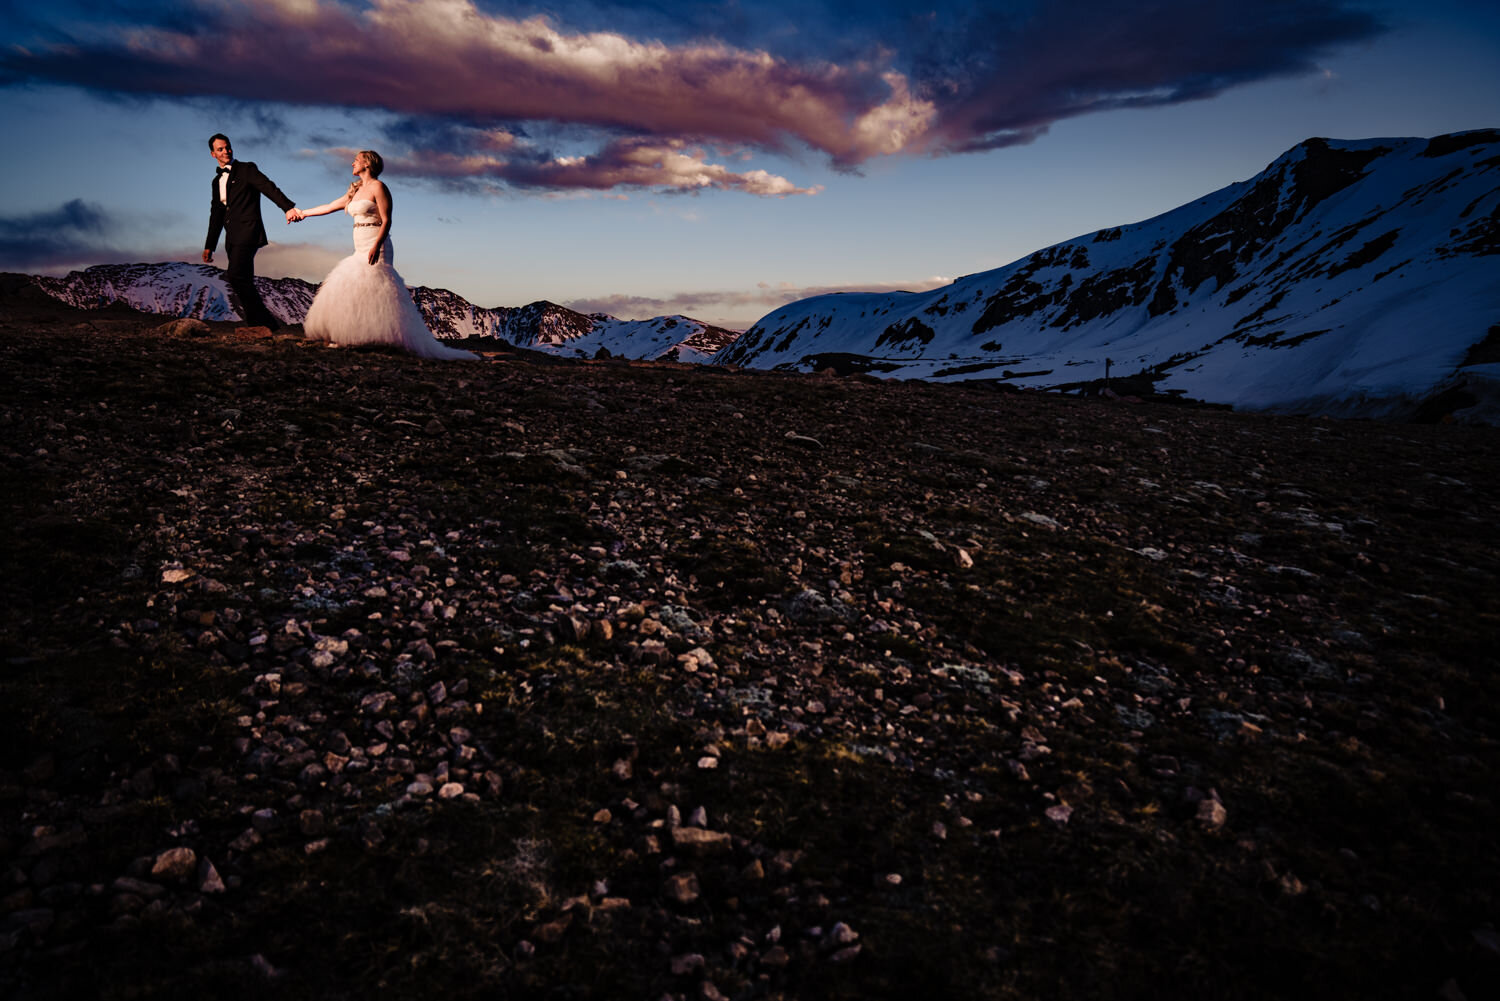  Loveland Pass Firstlook by Colorado wedding photographer Jared M. Gant of JMGant Photography. 